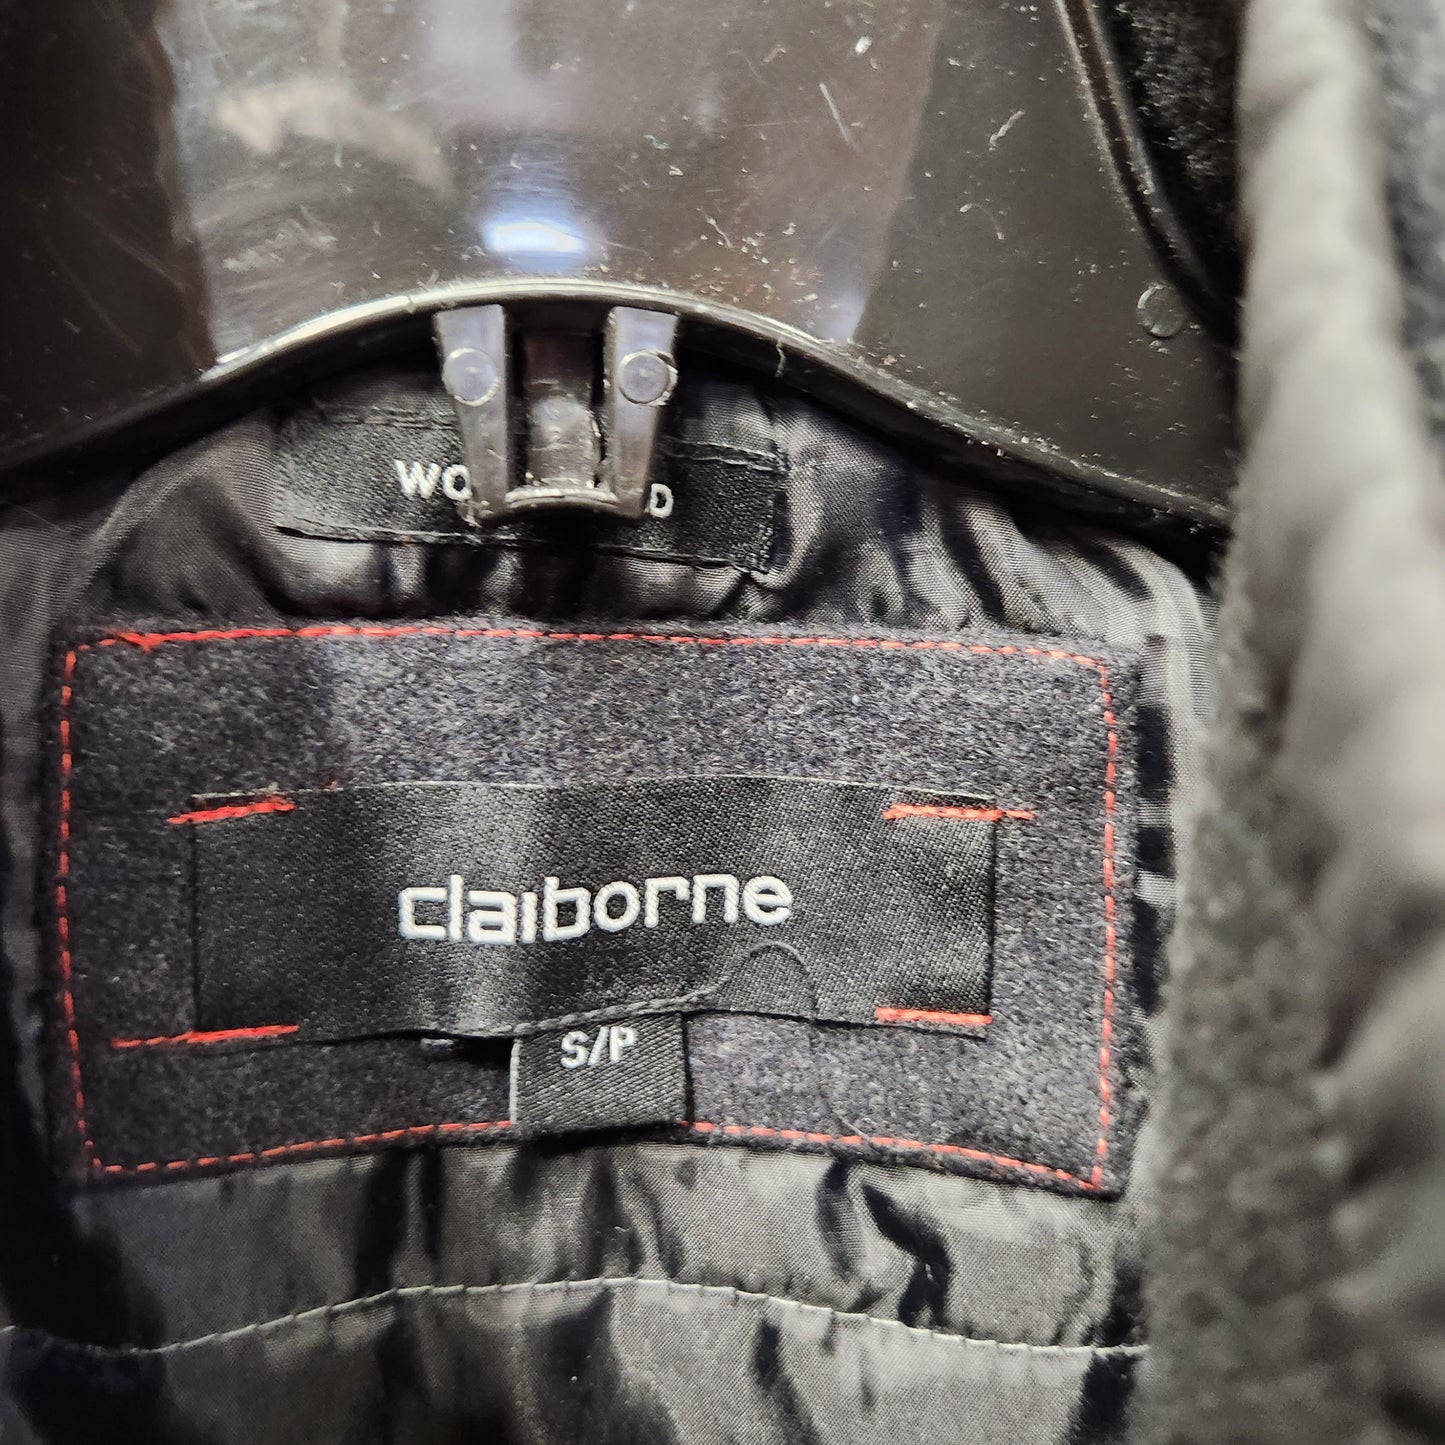 Claiborne Wool Blend Pea Men's Coat Black - Small